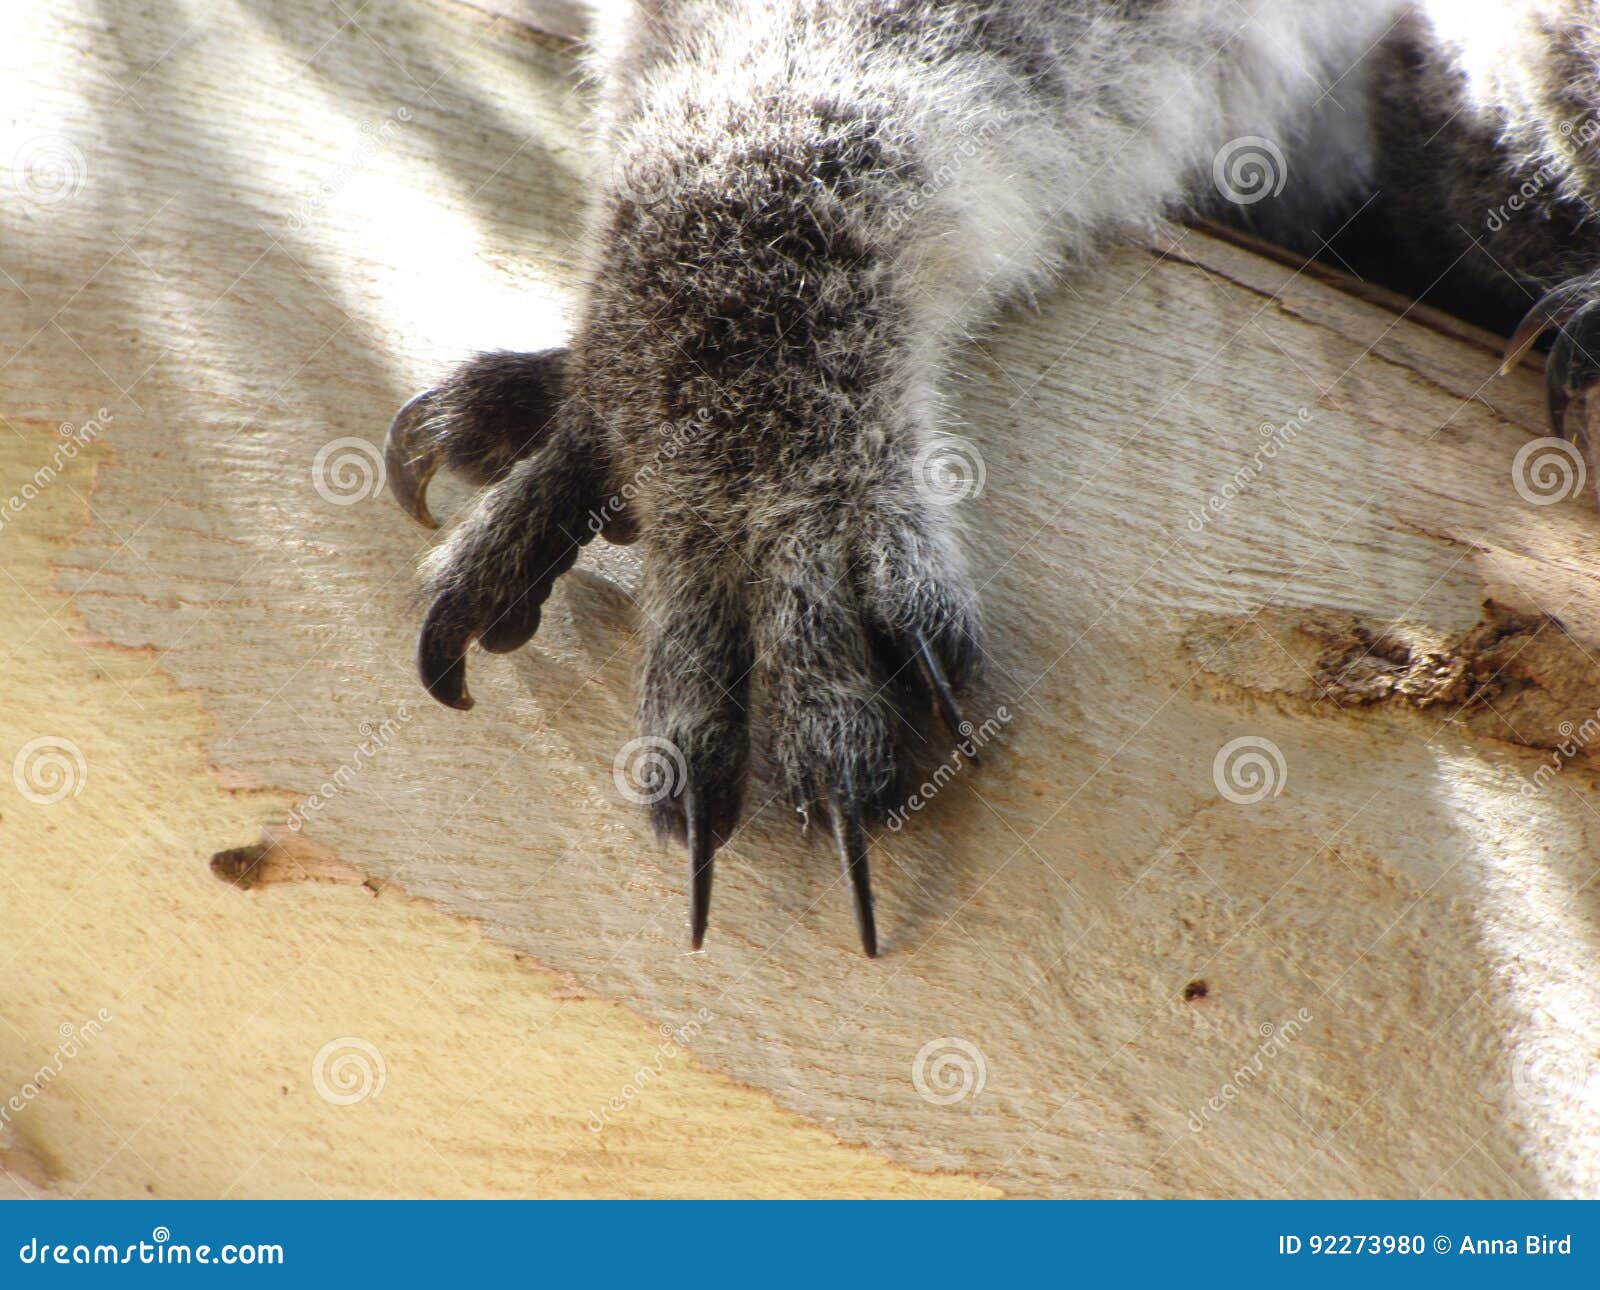 Koalas Paw while Tree Stock Photo - Image of koala, branch: 92273980